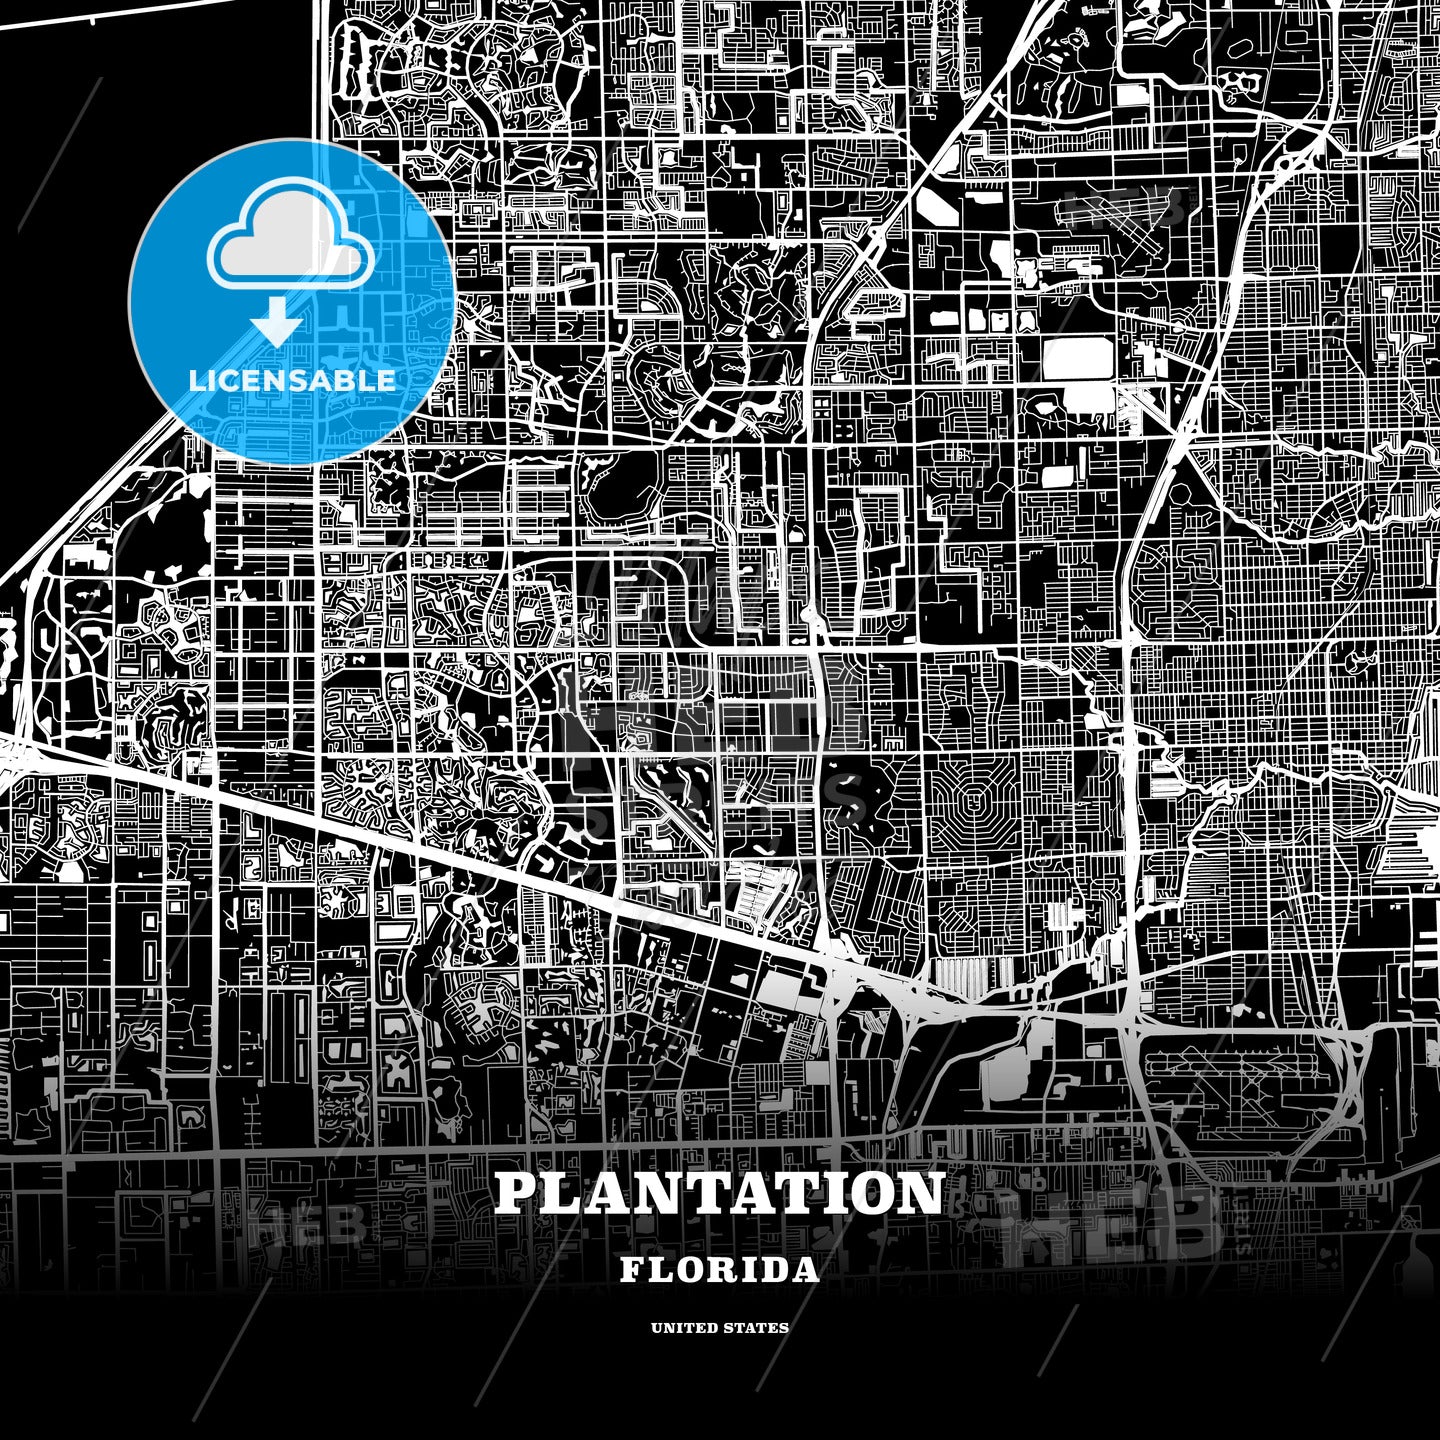 Plantation, Florida, USA map